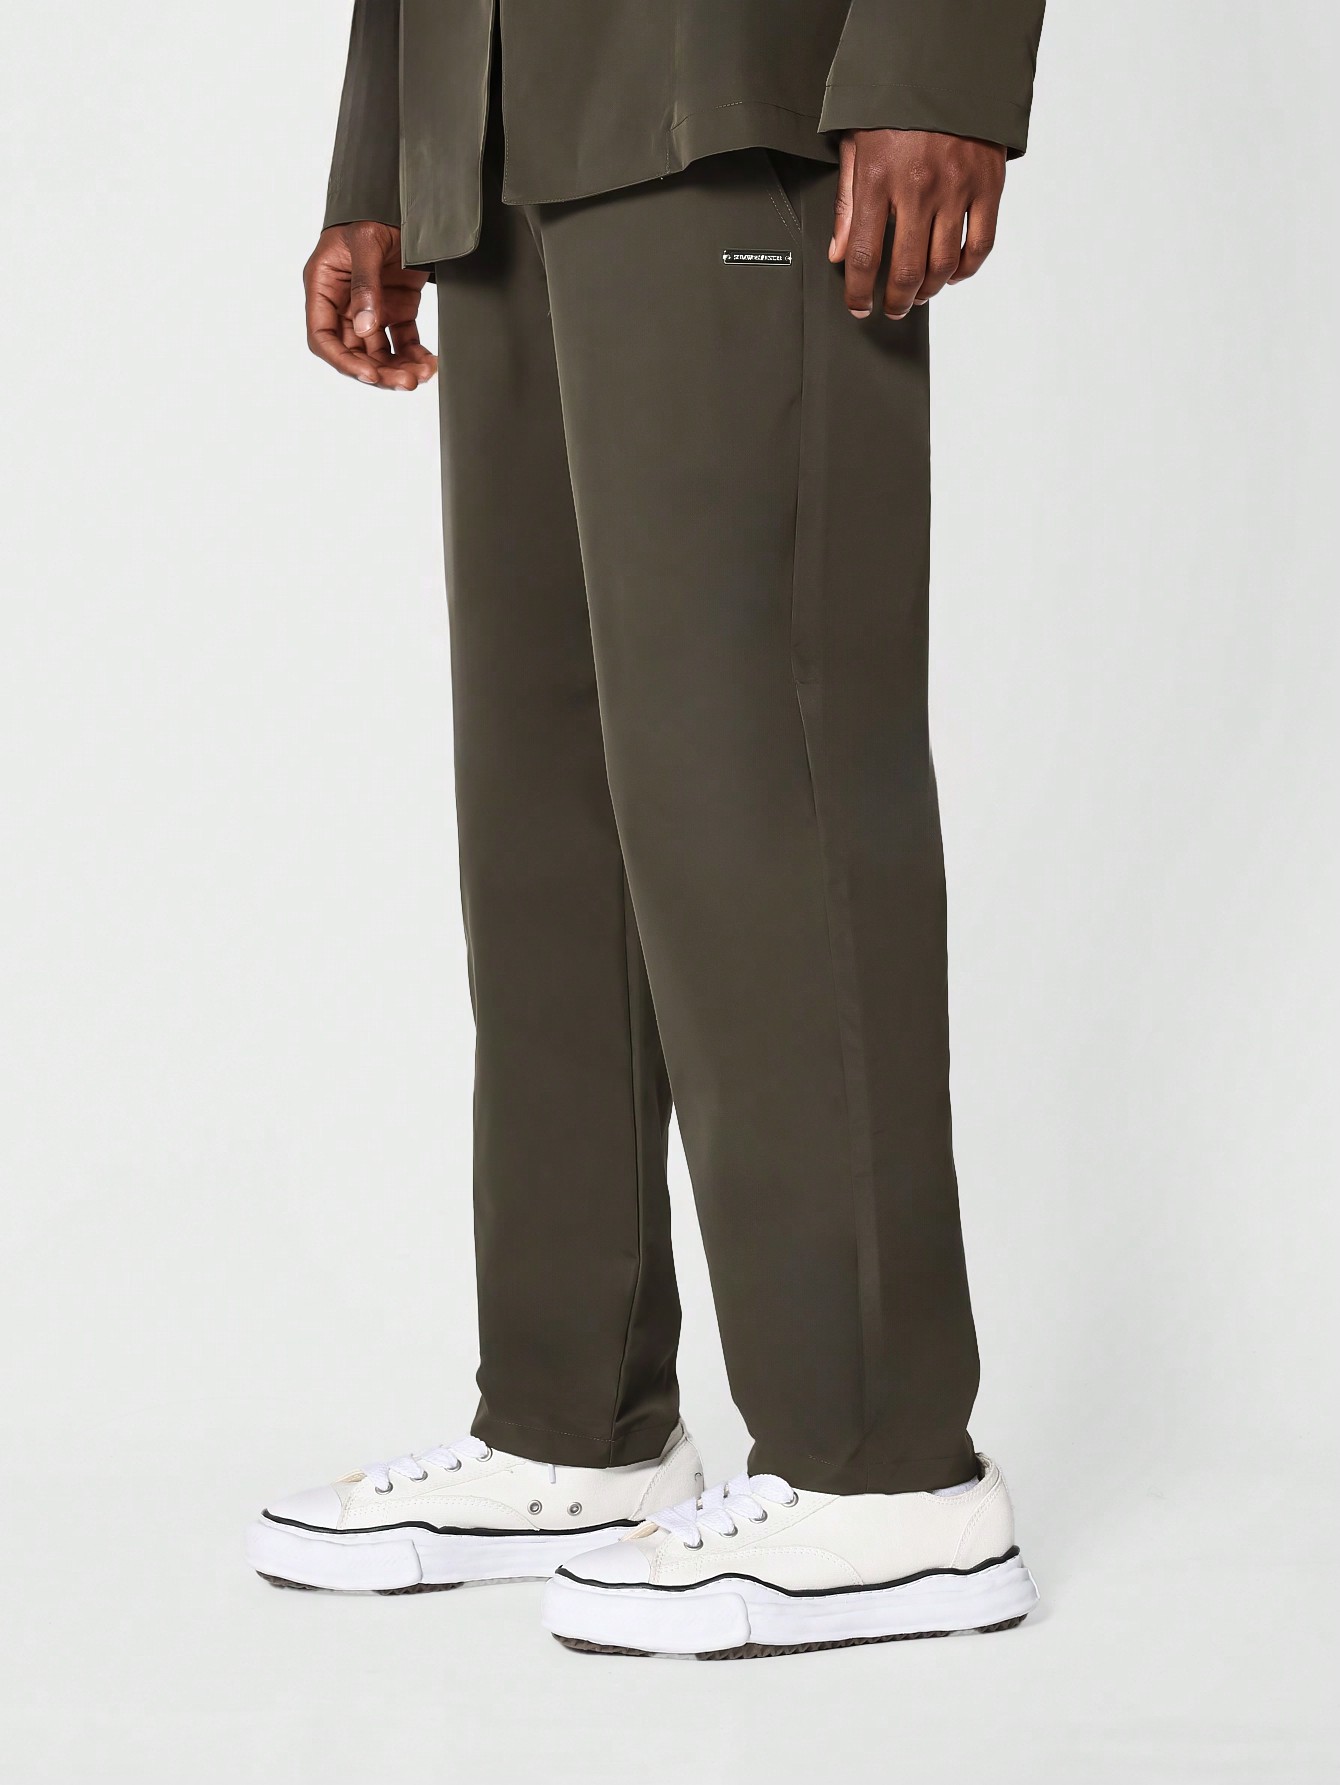 SUMWON Нейлоновые брюки для костюма, мокко браун multi functional s type trouser rack stainless steel multi iayer trouser rack traceless adult trouser hanger